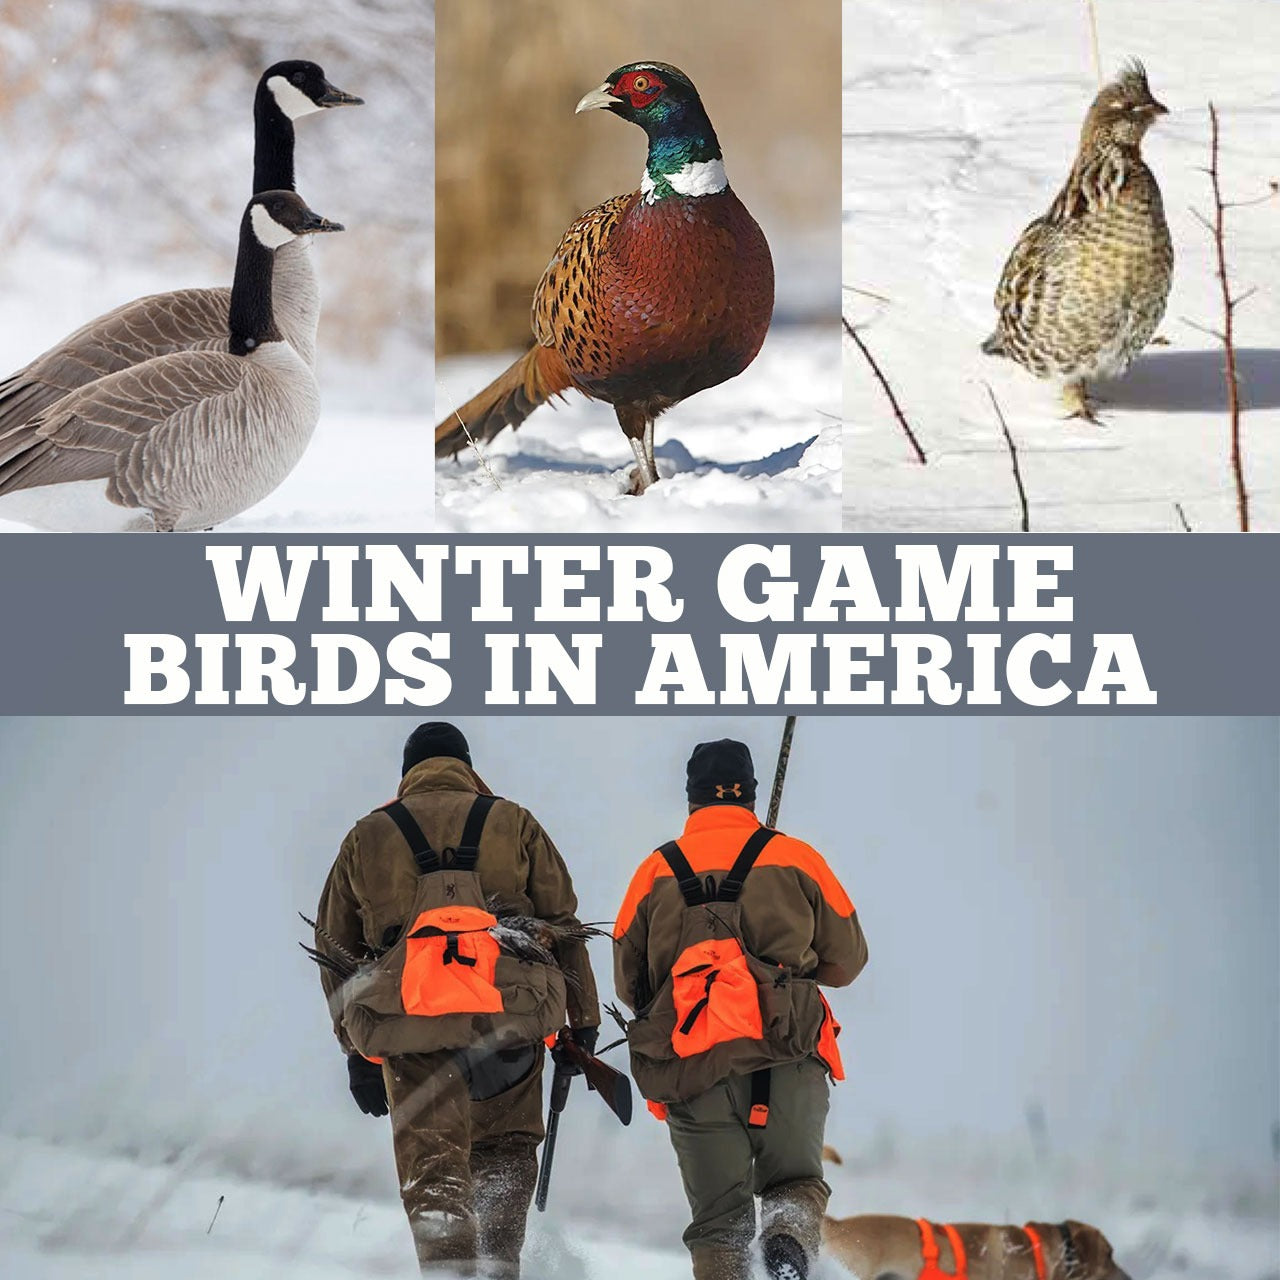 Winter Game Birds in America